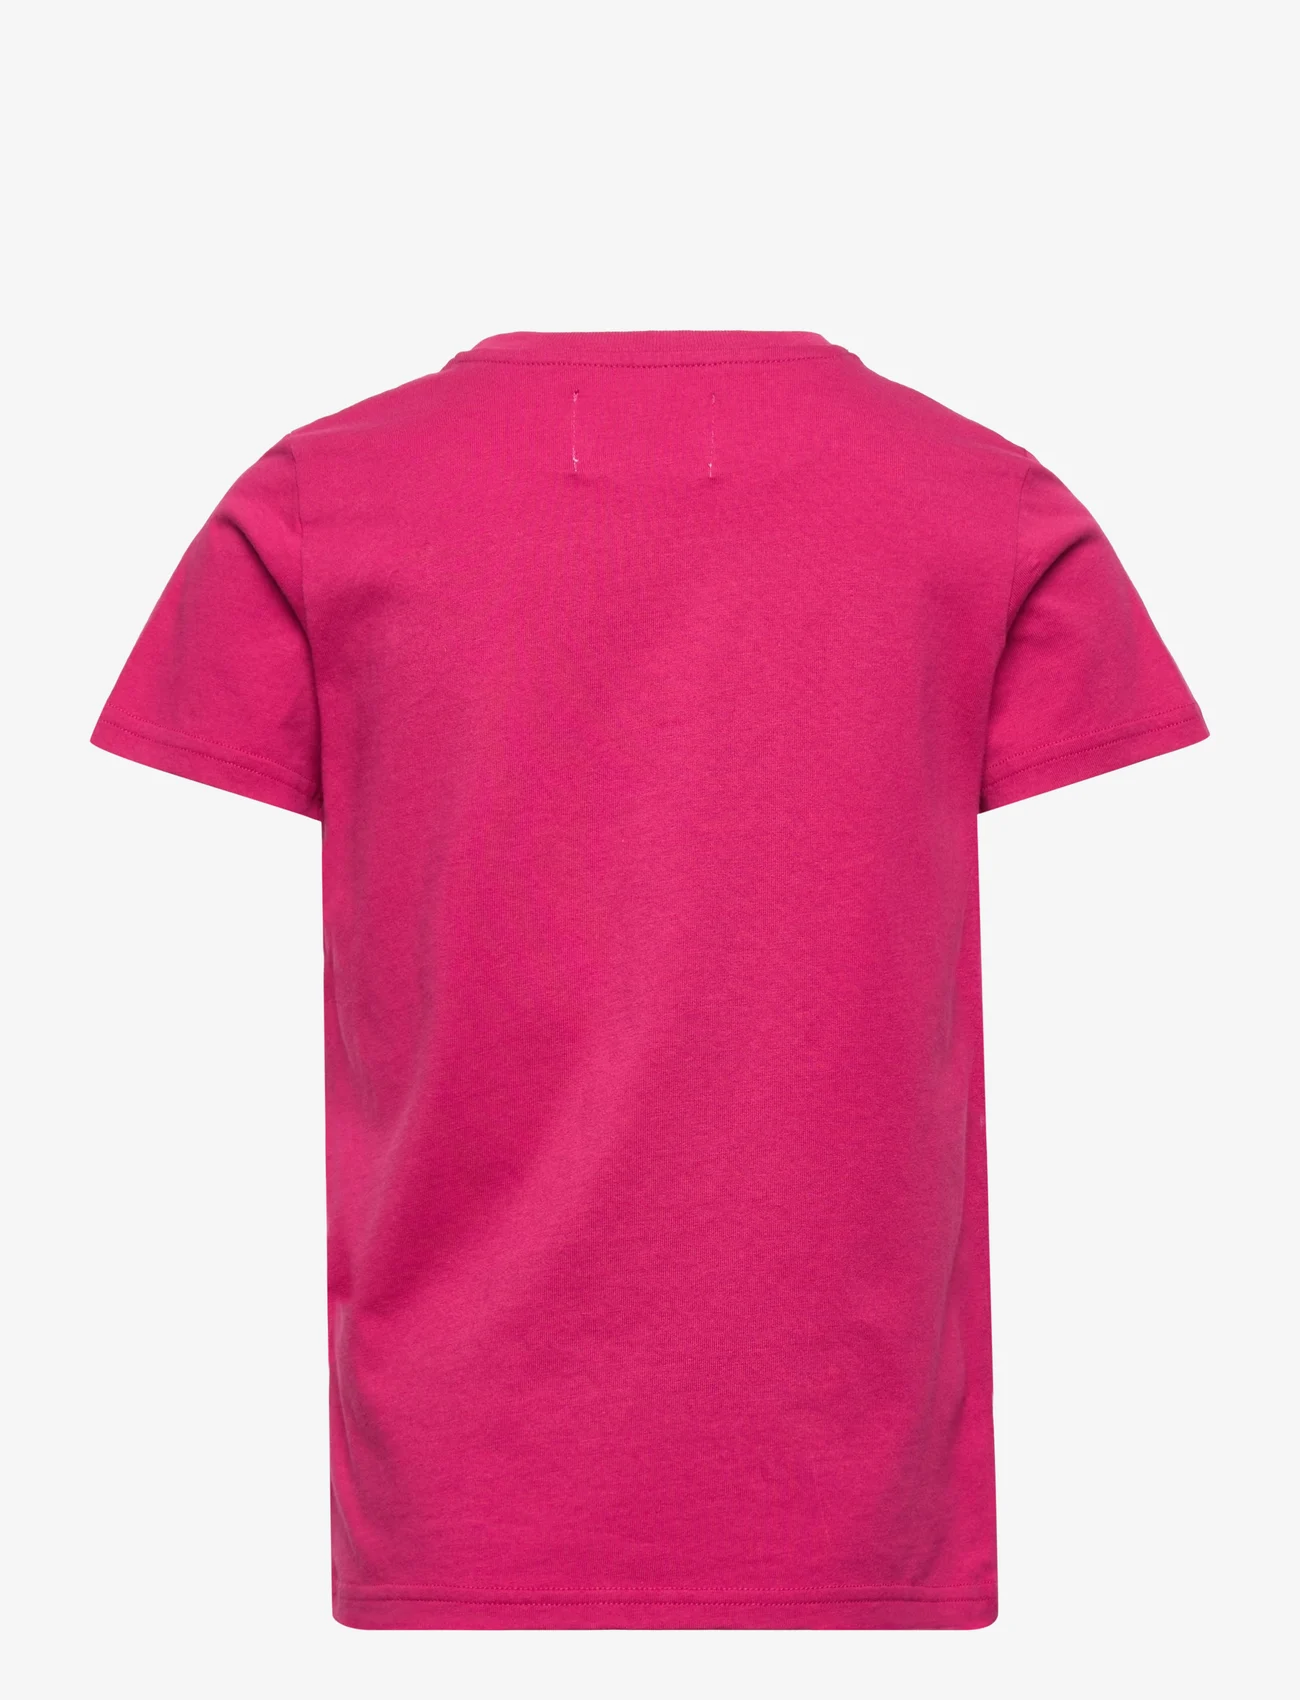 Wood Wood - Ola AA kids T-shirt - kurzärmelige - pink - 1